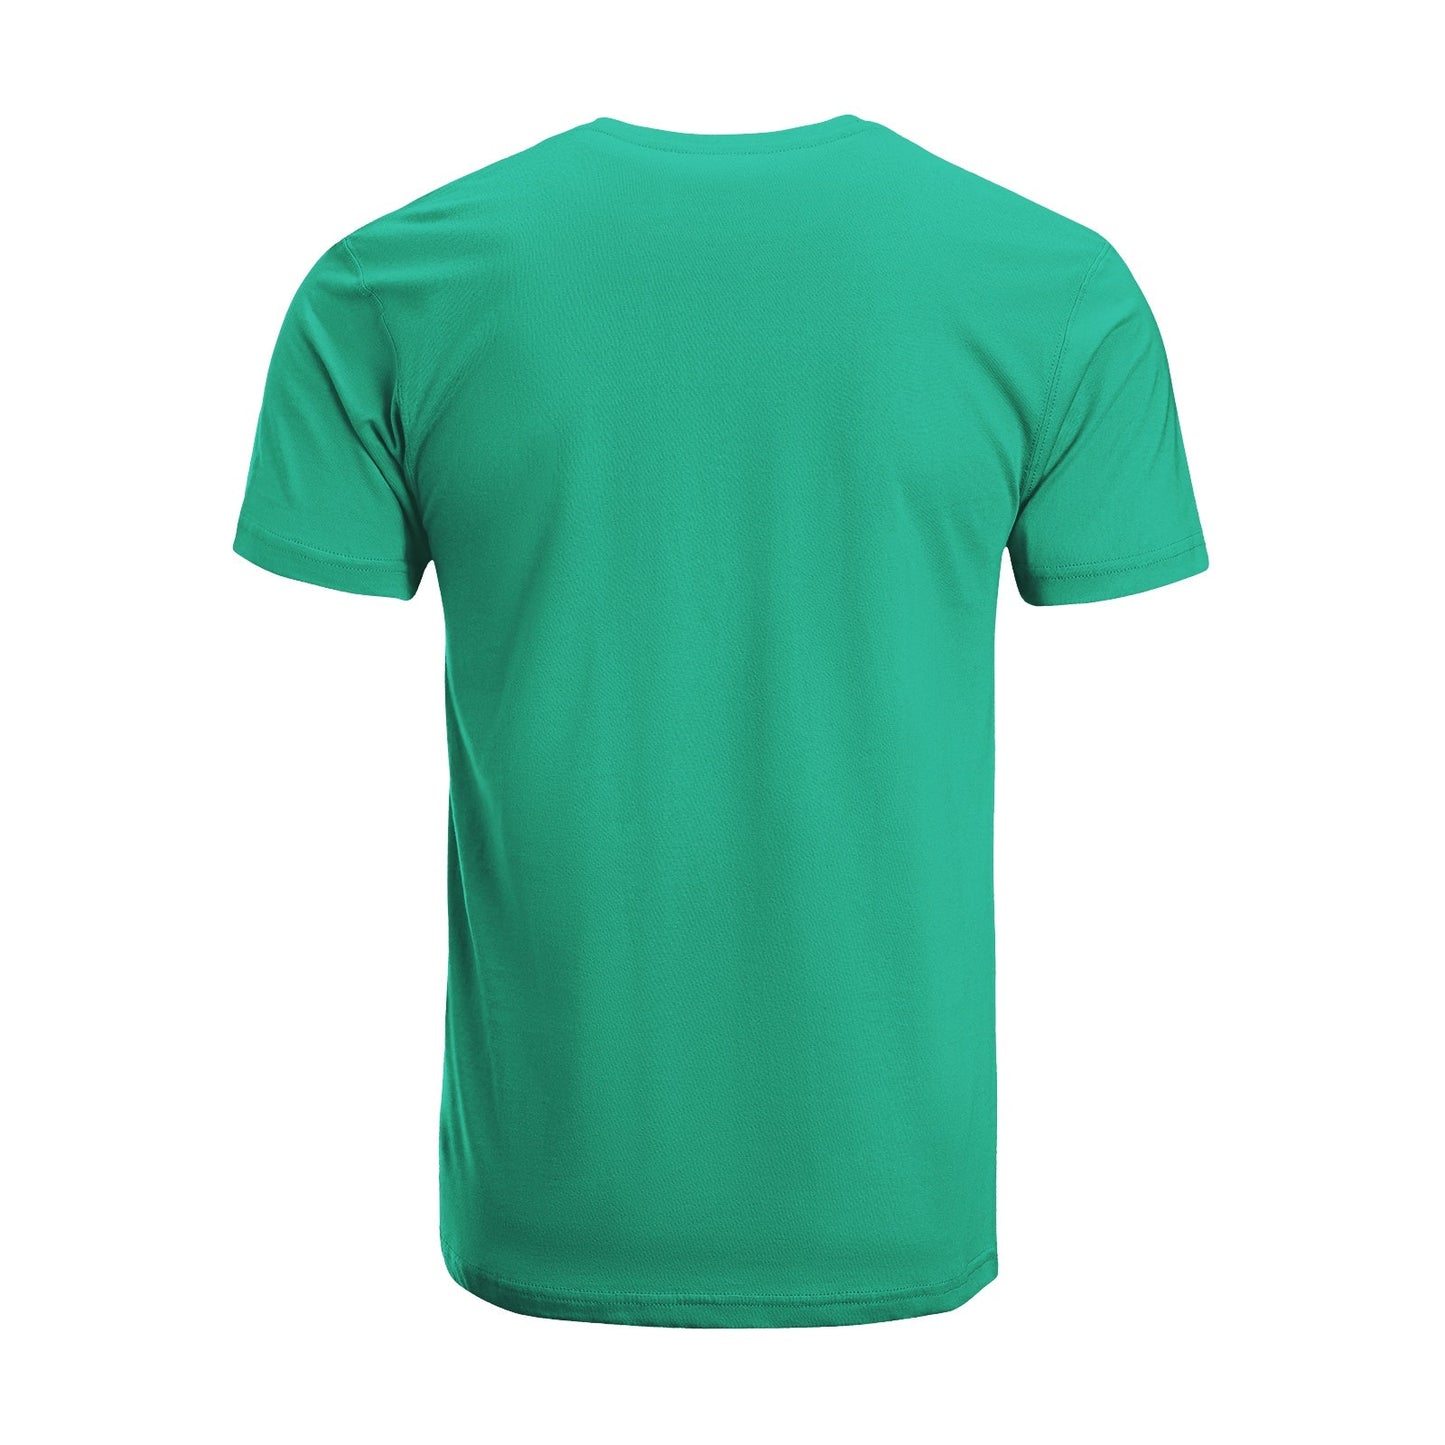 Unisex Short Sleeve Crew Neck Cotton Jersey T-Shirt MOM 07